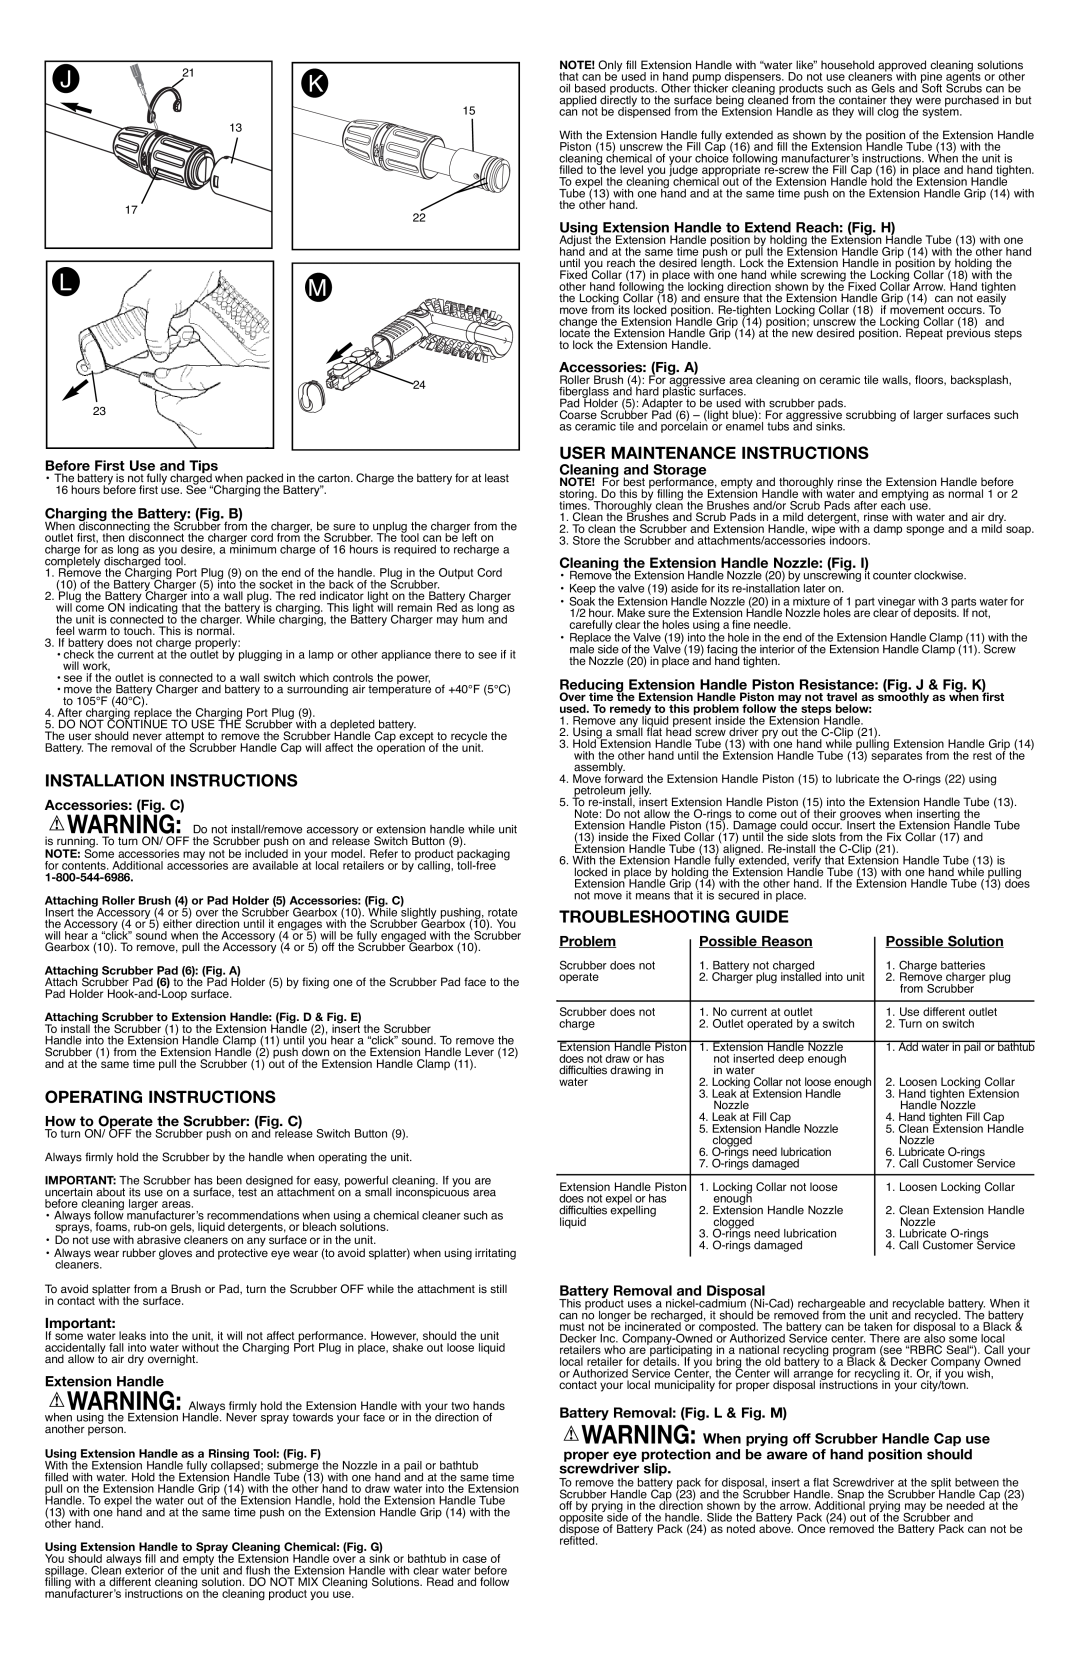 Black & Decker S700E instruction manual User Maintenance Instructions, Installation Instructions, Operating Instructions 